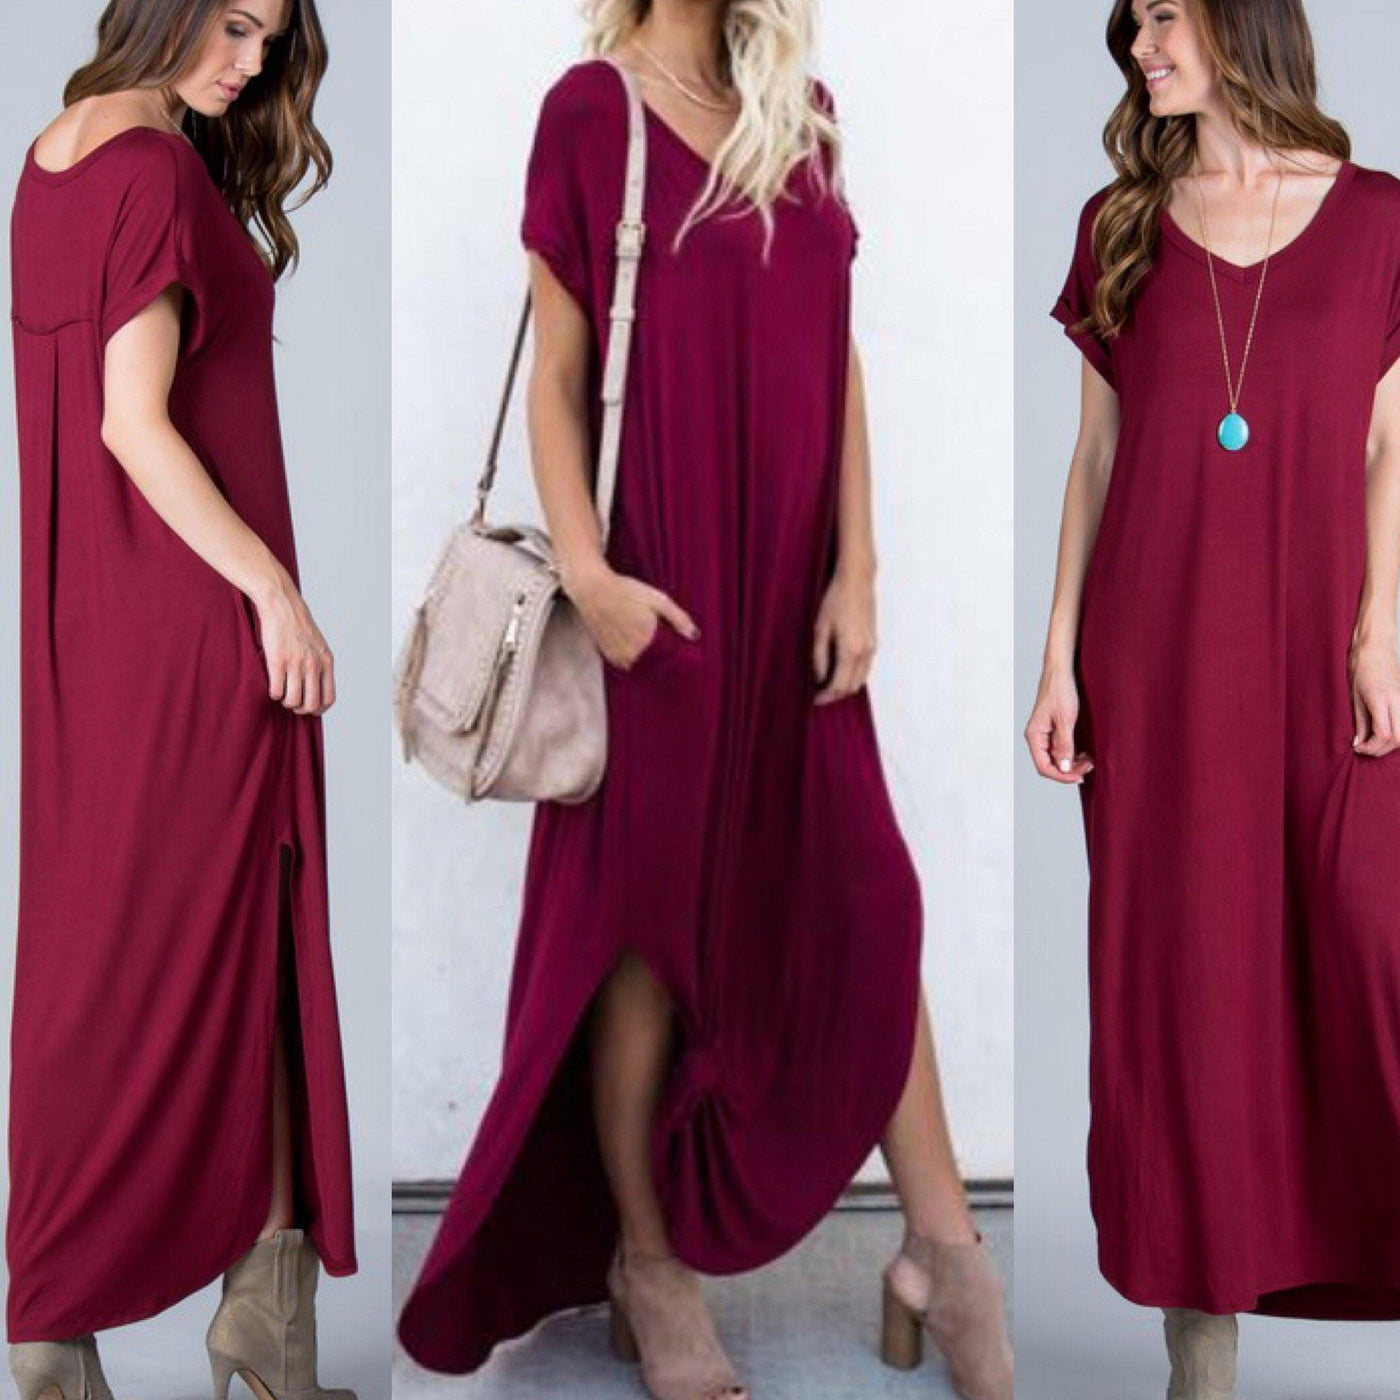 Red Wine Maxi Dress with Side Pockets - Dress - dalia + jade 